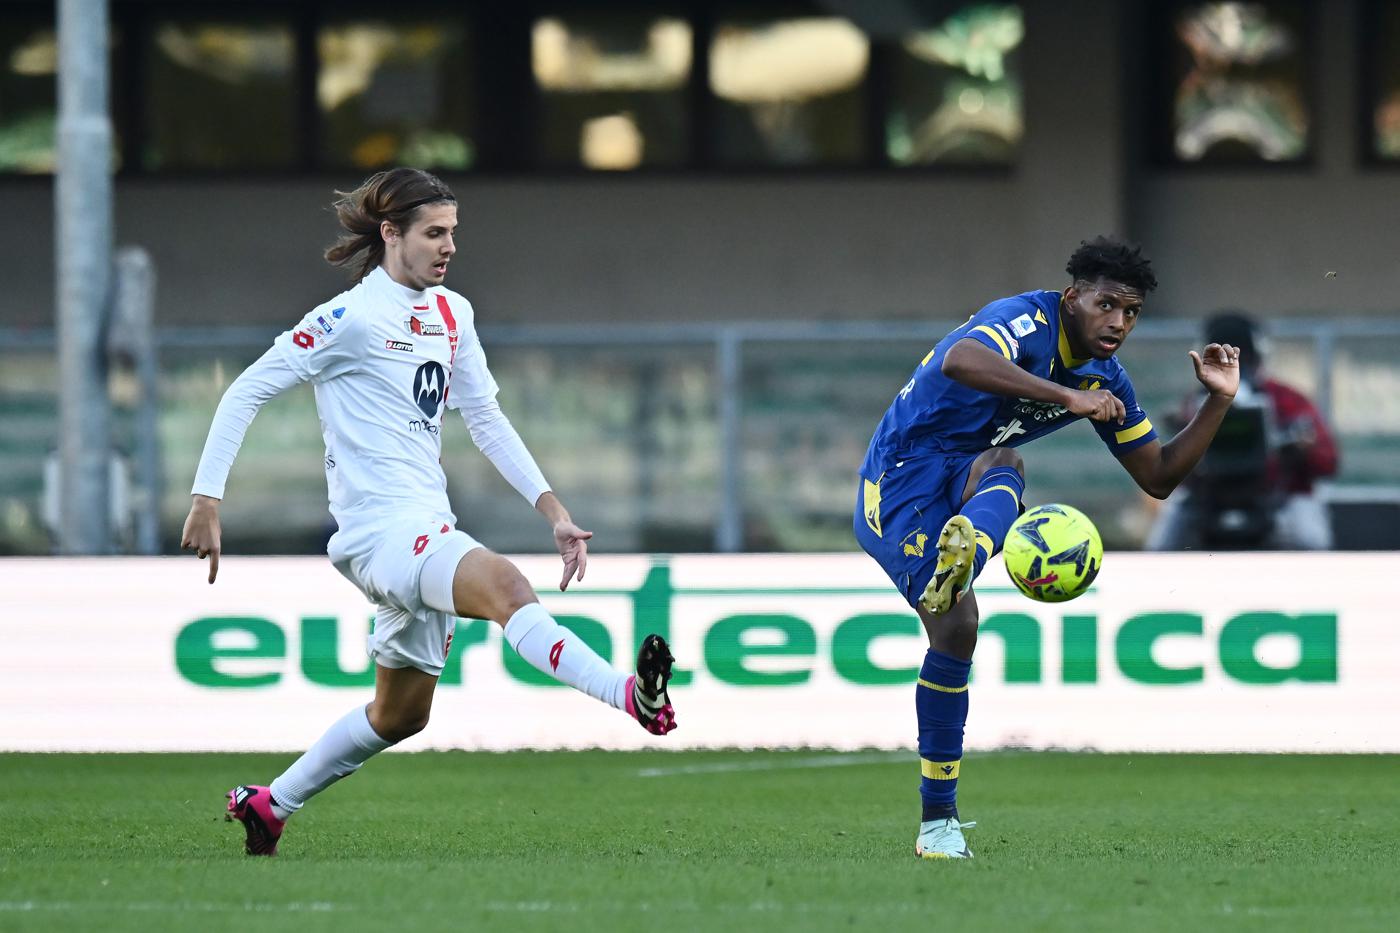 Verona gegen Monza - 1-1. Italienische Liga-Meisterschaft, 26. Spielbericht, Statistik